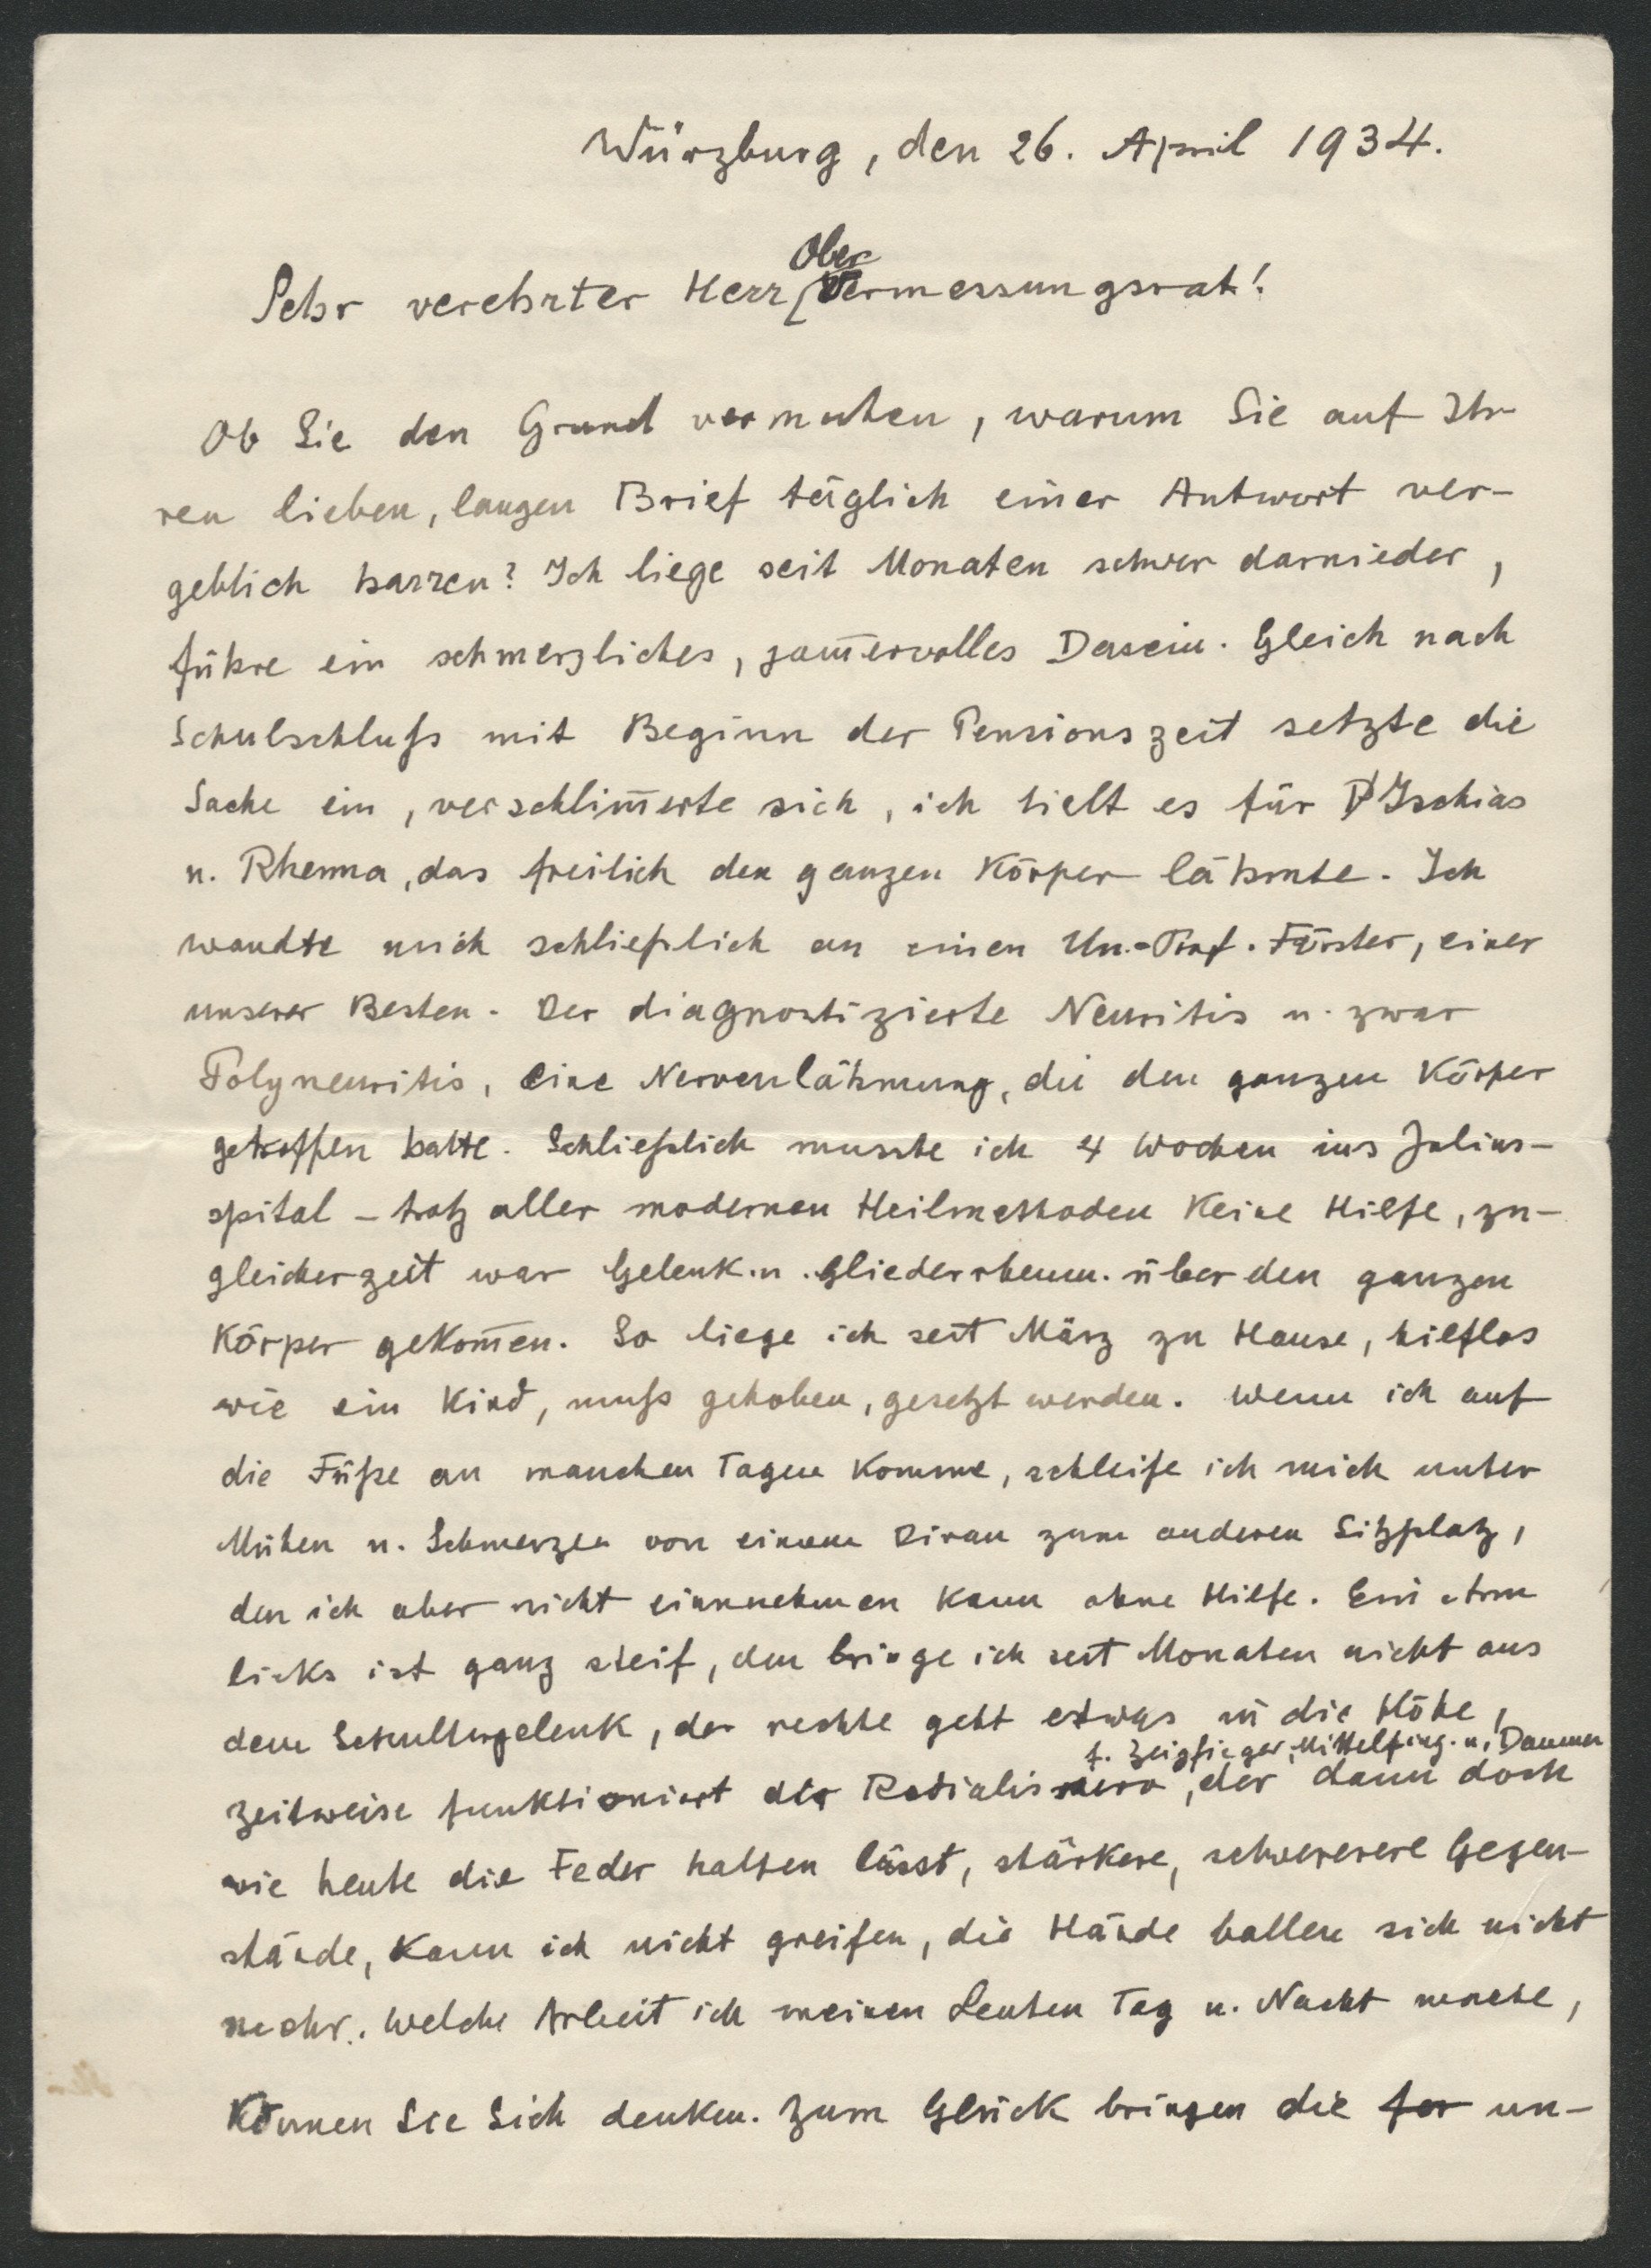 Brief von K. Hemmerich an Obervermessungsrat Frank, 26.4.1934 (Stadtmuseum Bad Dürkheim im Kulturzentrum Haus Catoir CC BY-NC-SA)